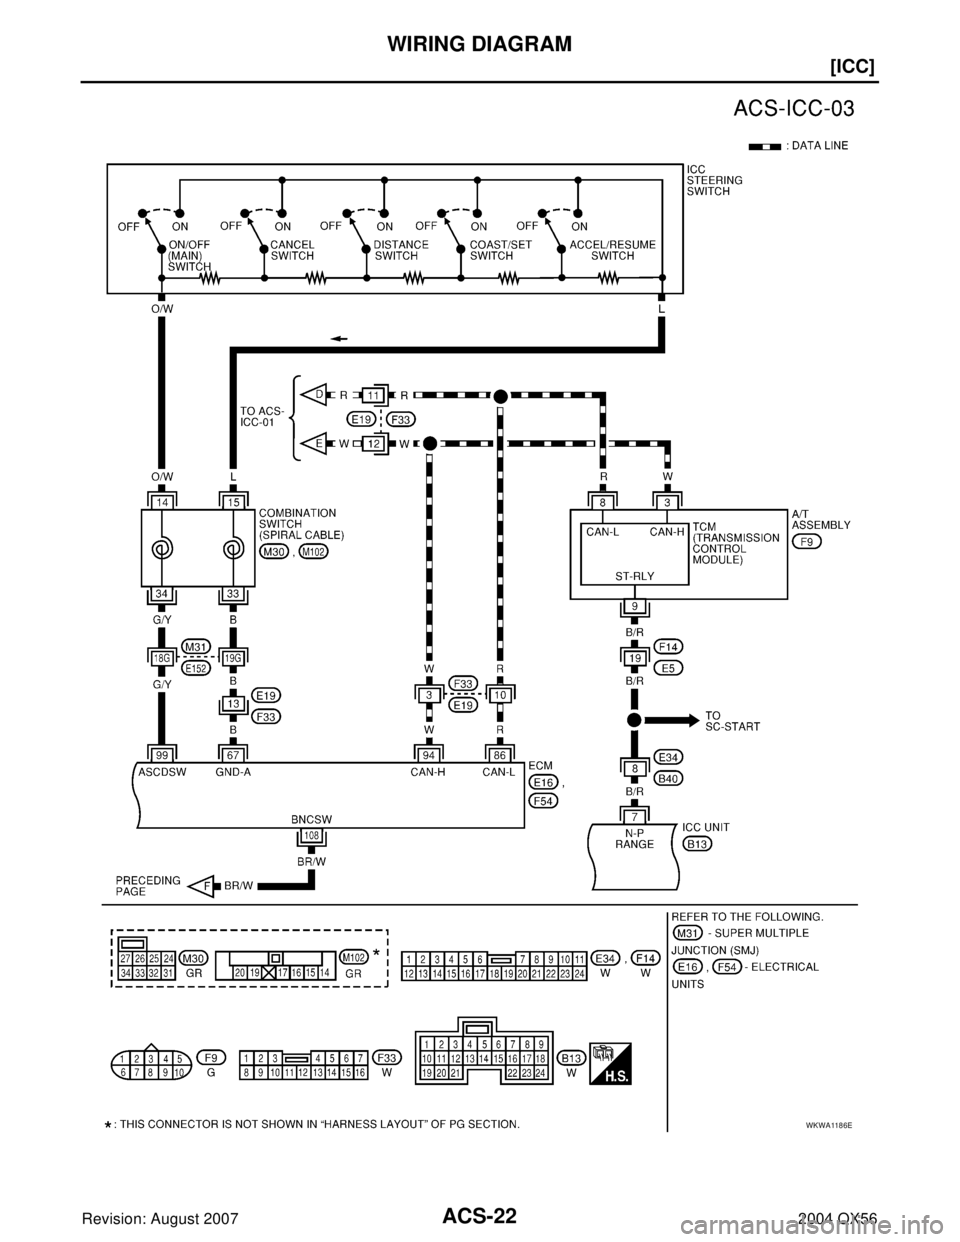 INFINITI QX56 2004  Factory Service Manual ACS-22
[ICC]
WIRING DIAGRAM
Revision: August 20072004 QX56
WKWA1186E 